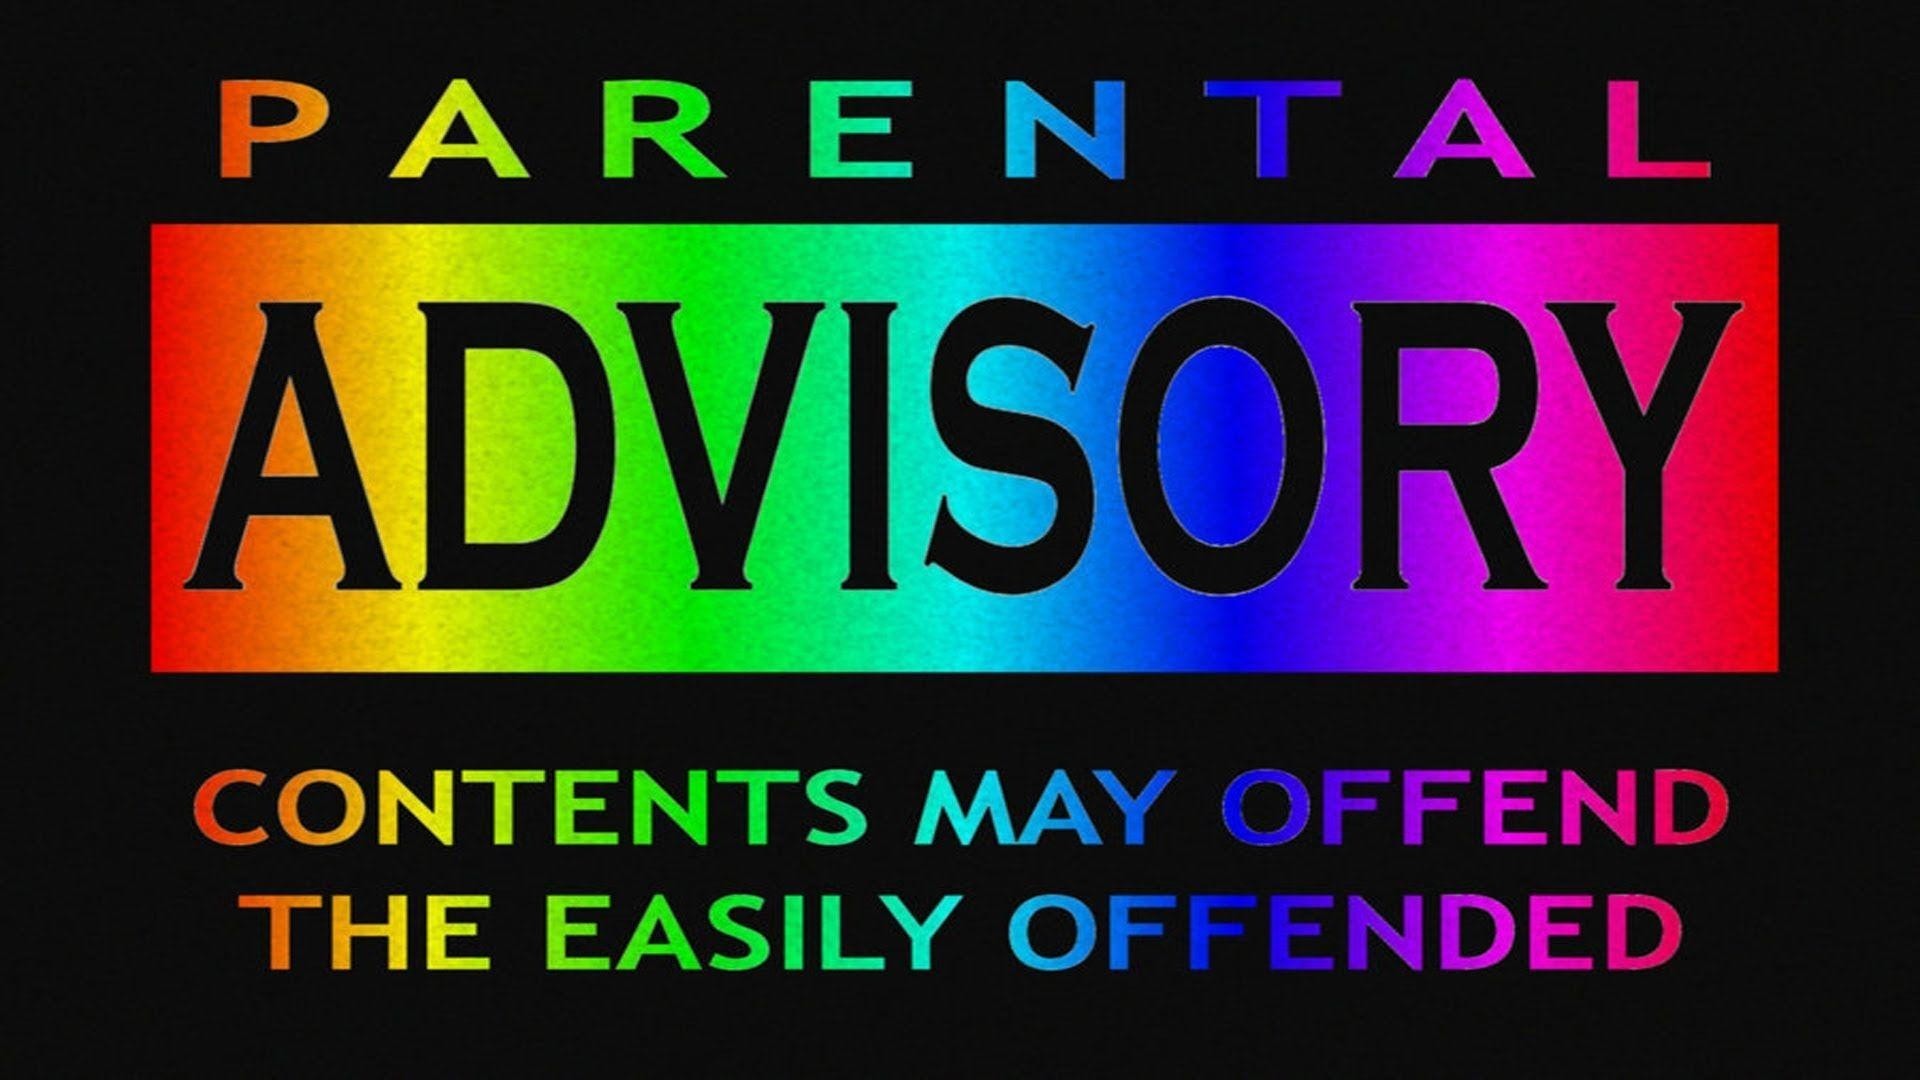 Parental Advisory Download Wallpaper